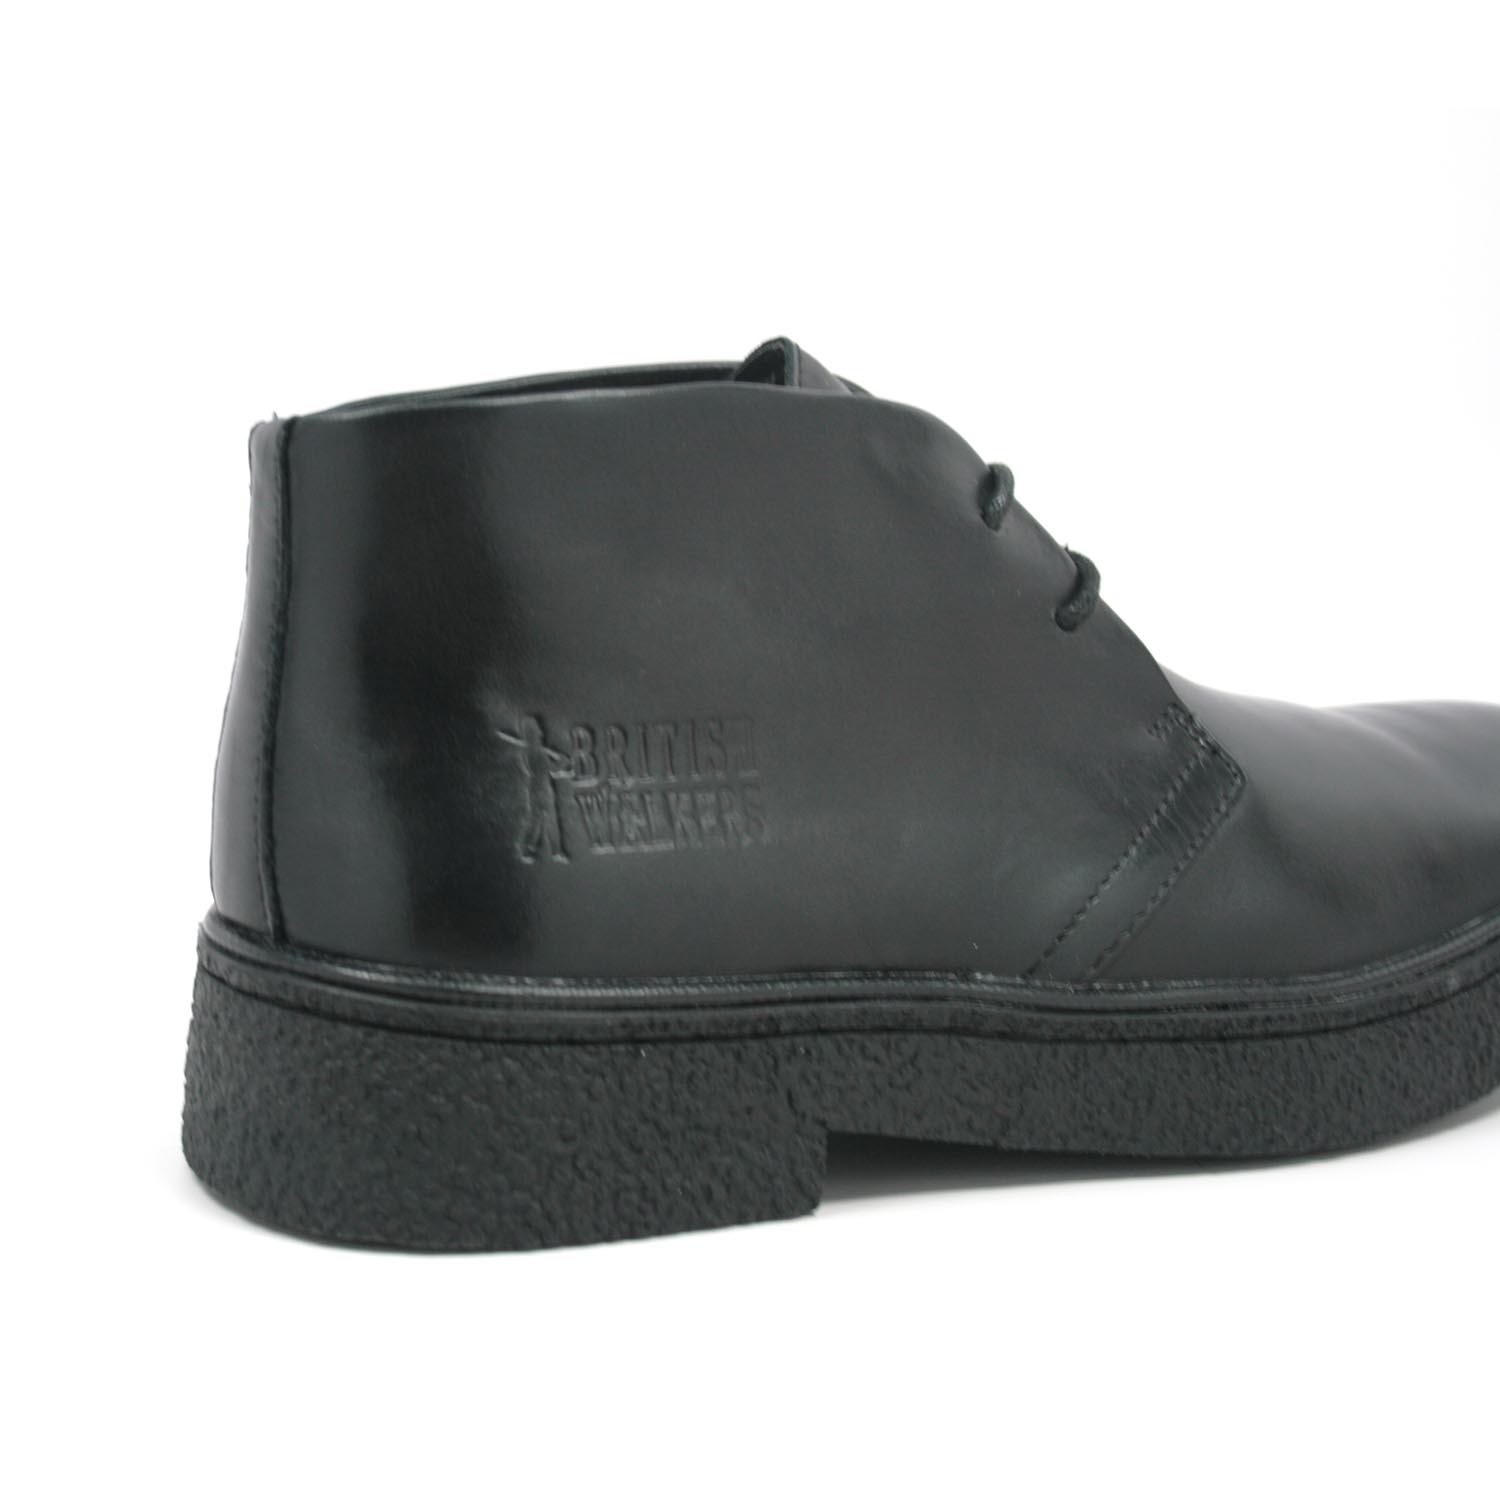 British Walkers Men's Playboy Chukka Boot Black Leather [1226-1] - $99. ...